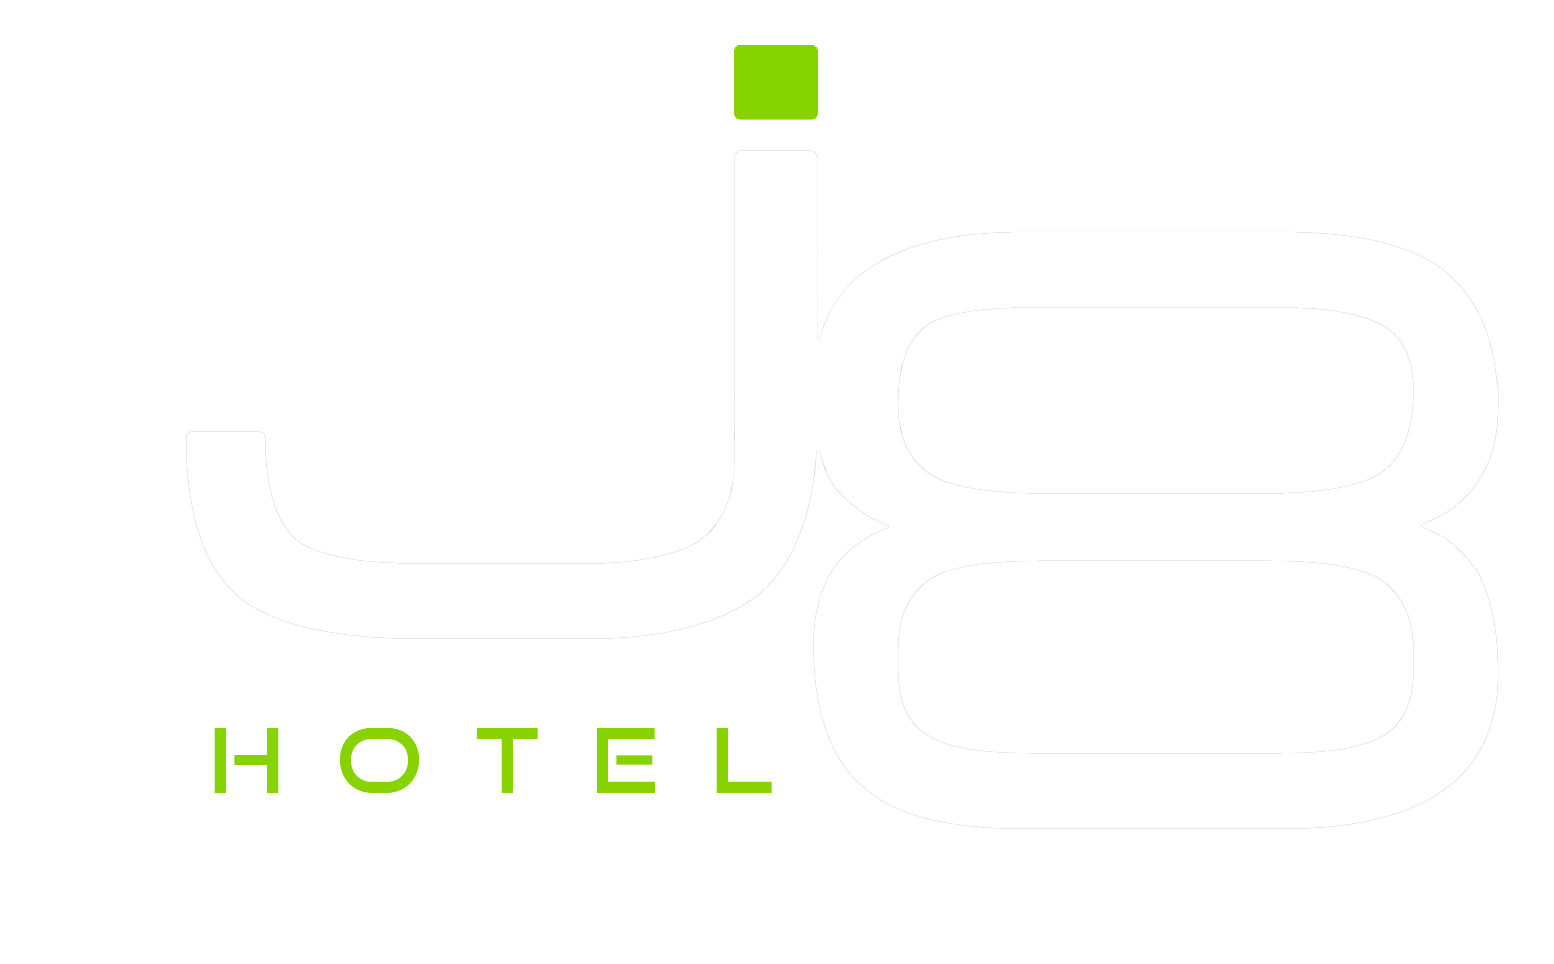 J8 Hotel